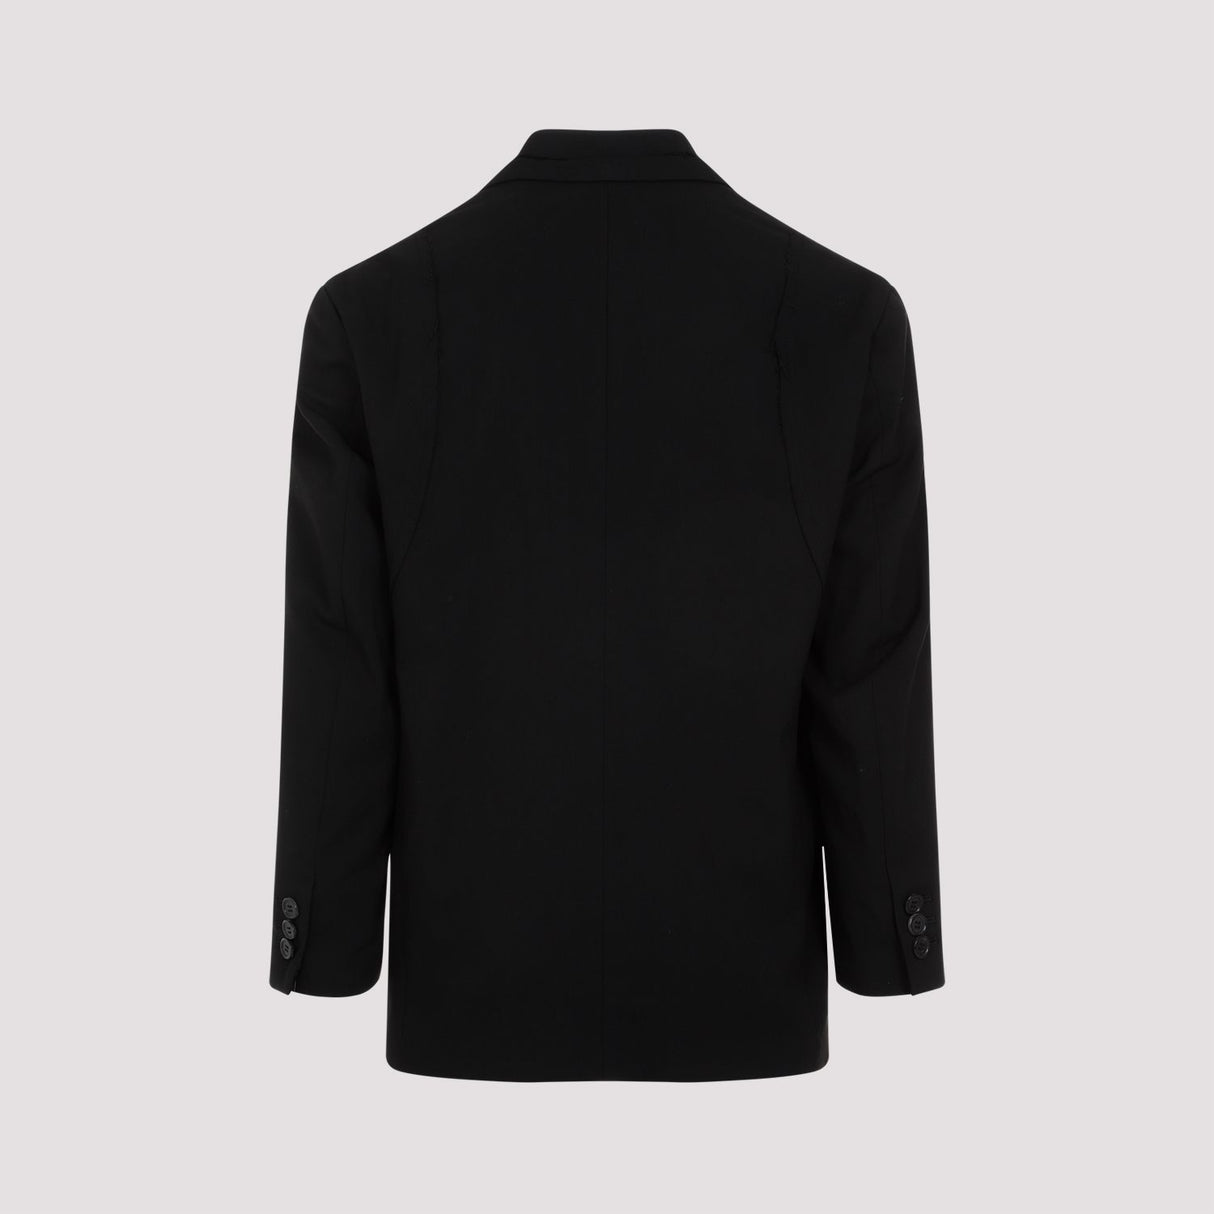 UNDERCOVER Stylish Black Polyester Jacket for Men - FW23